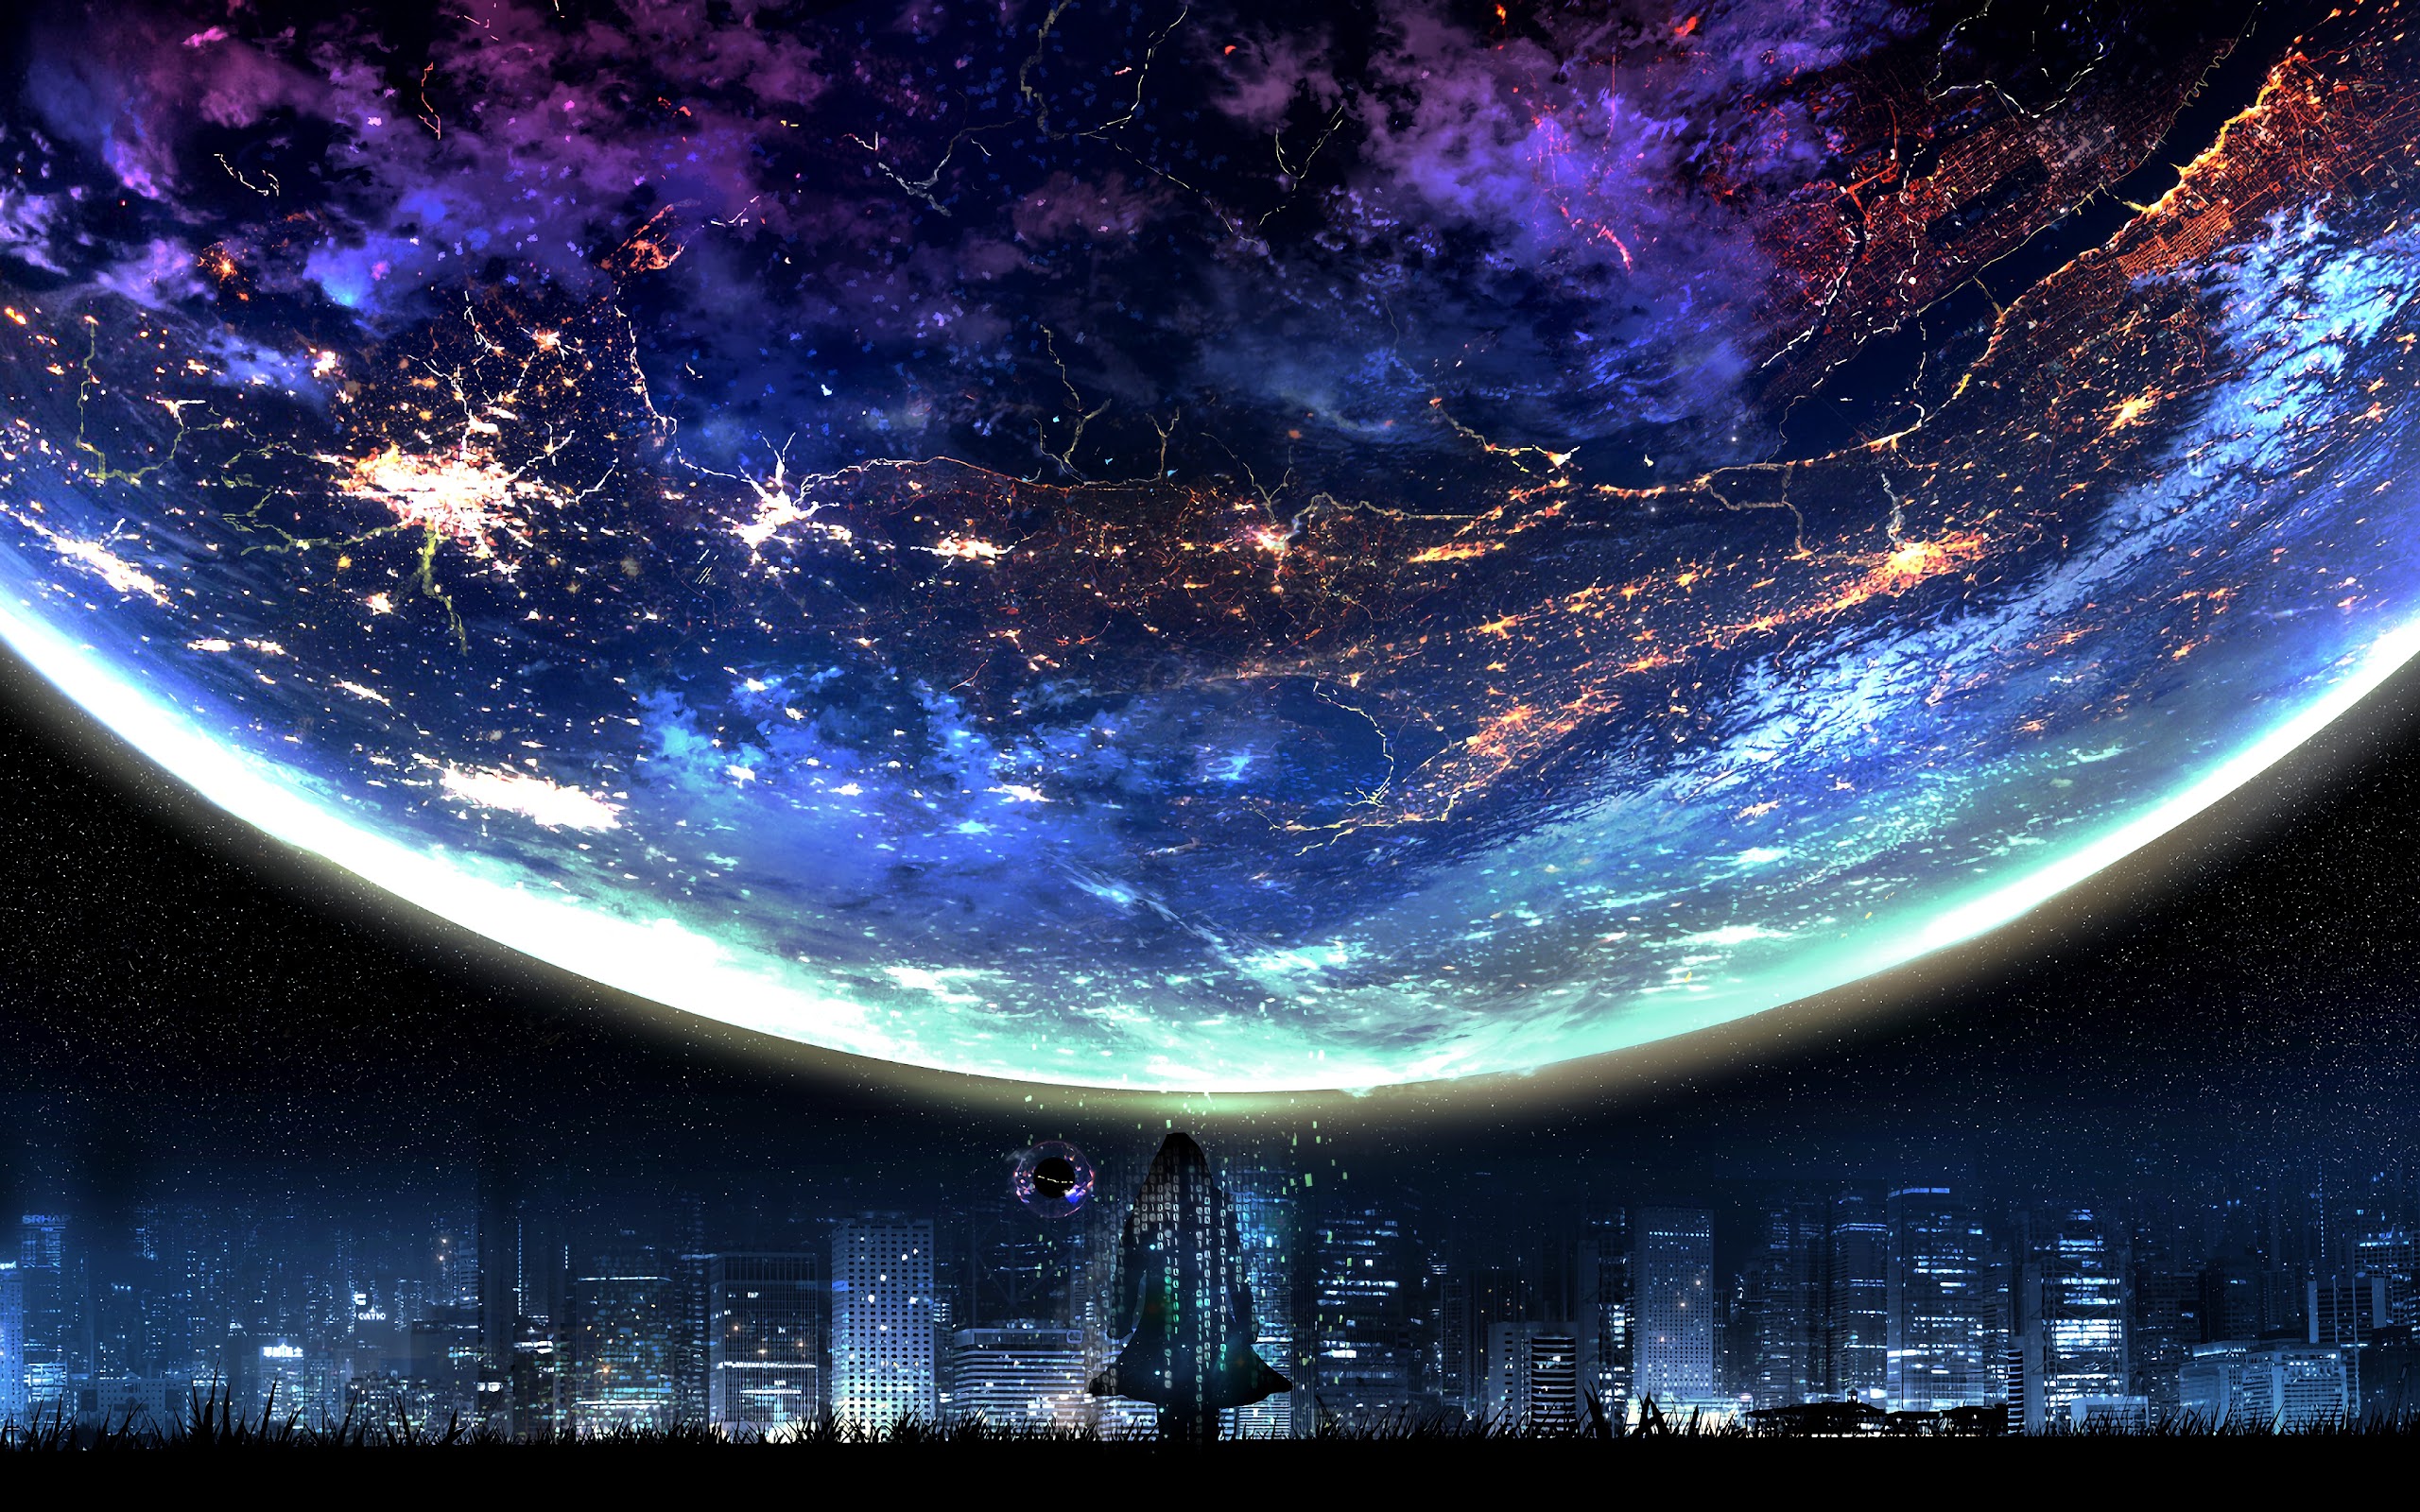 Pla Night City Landscape Scenery Anime 4k Wallpaper